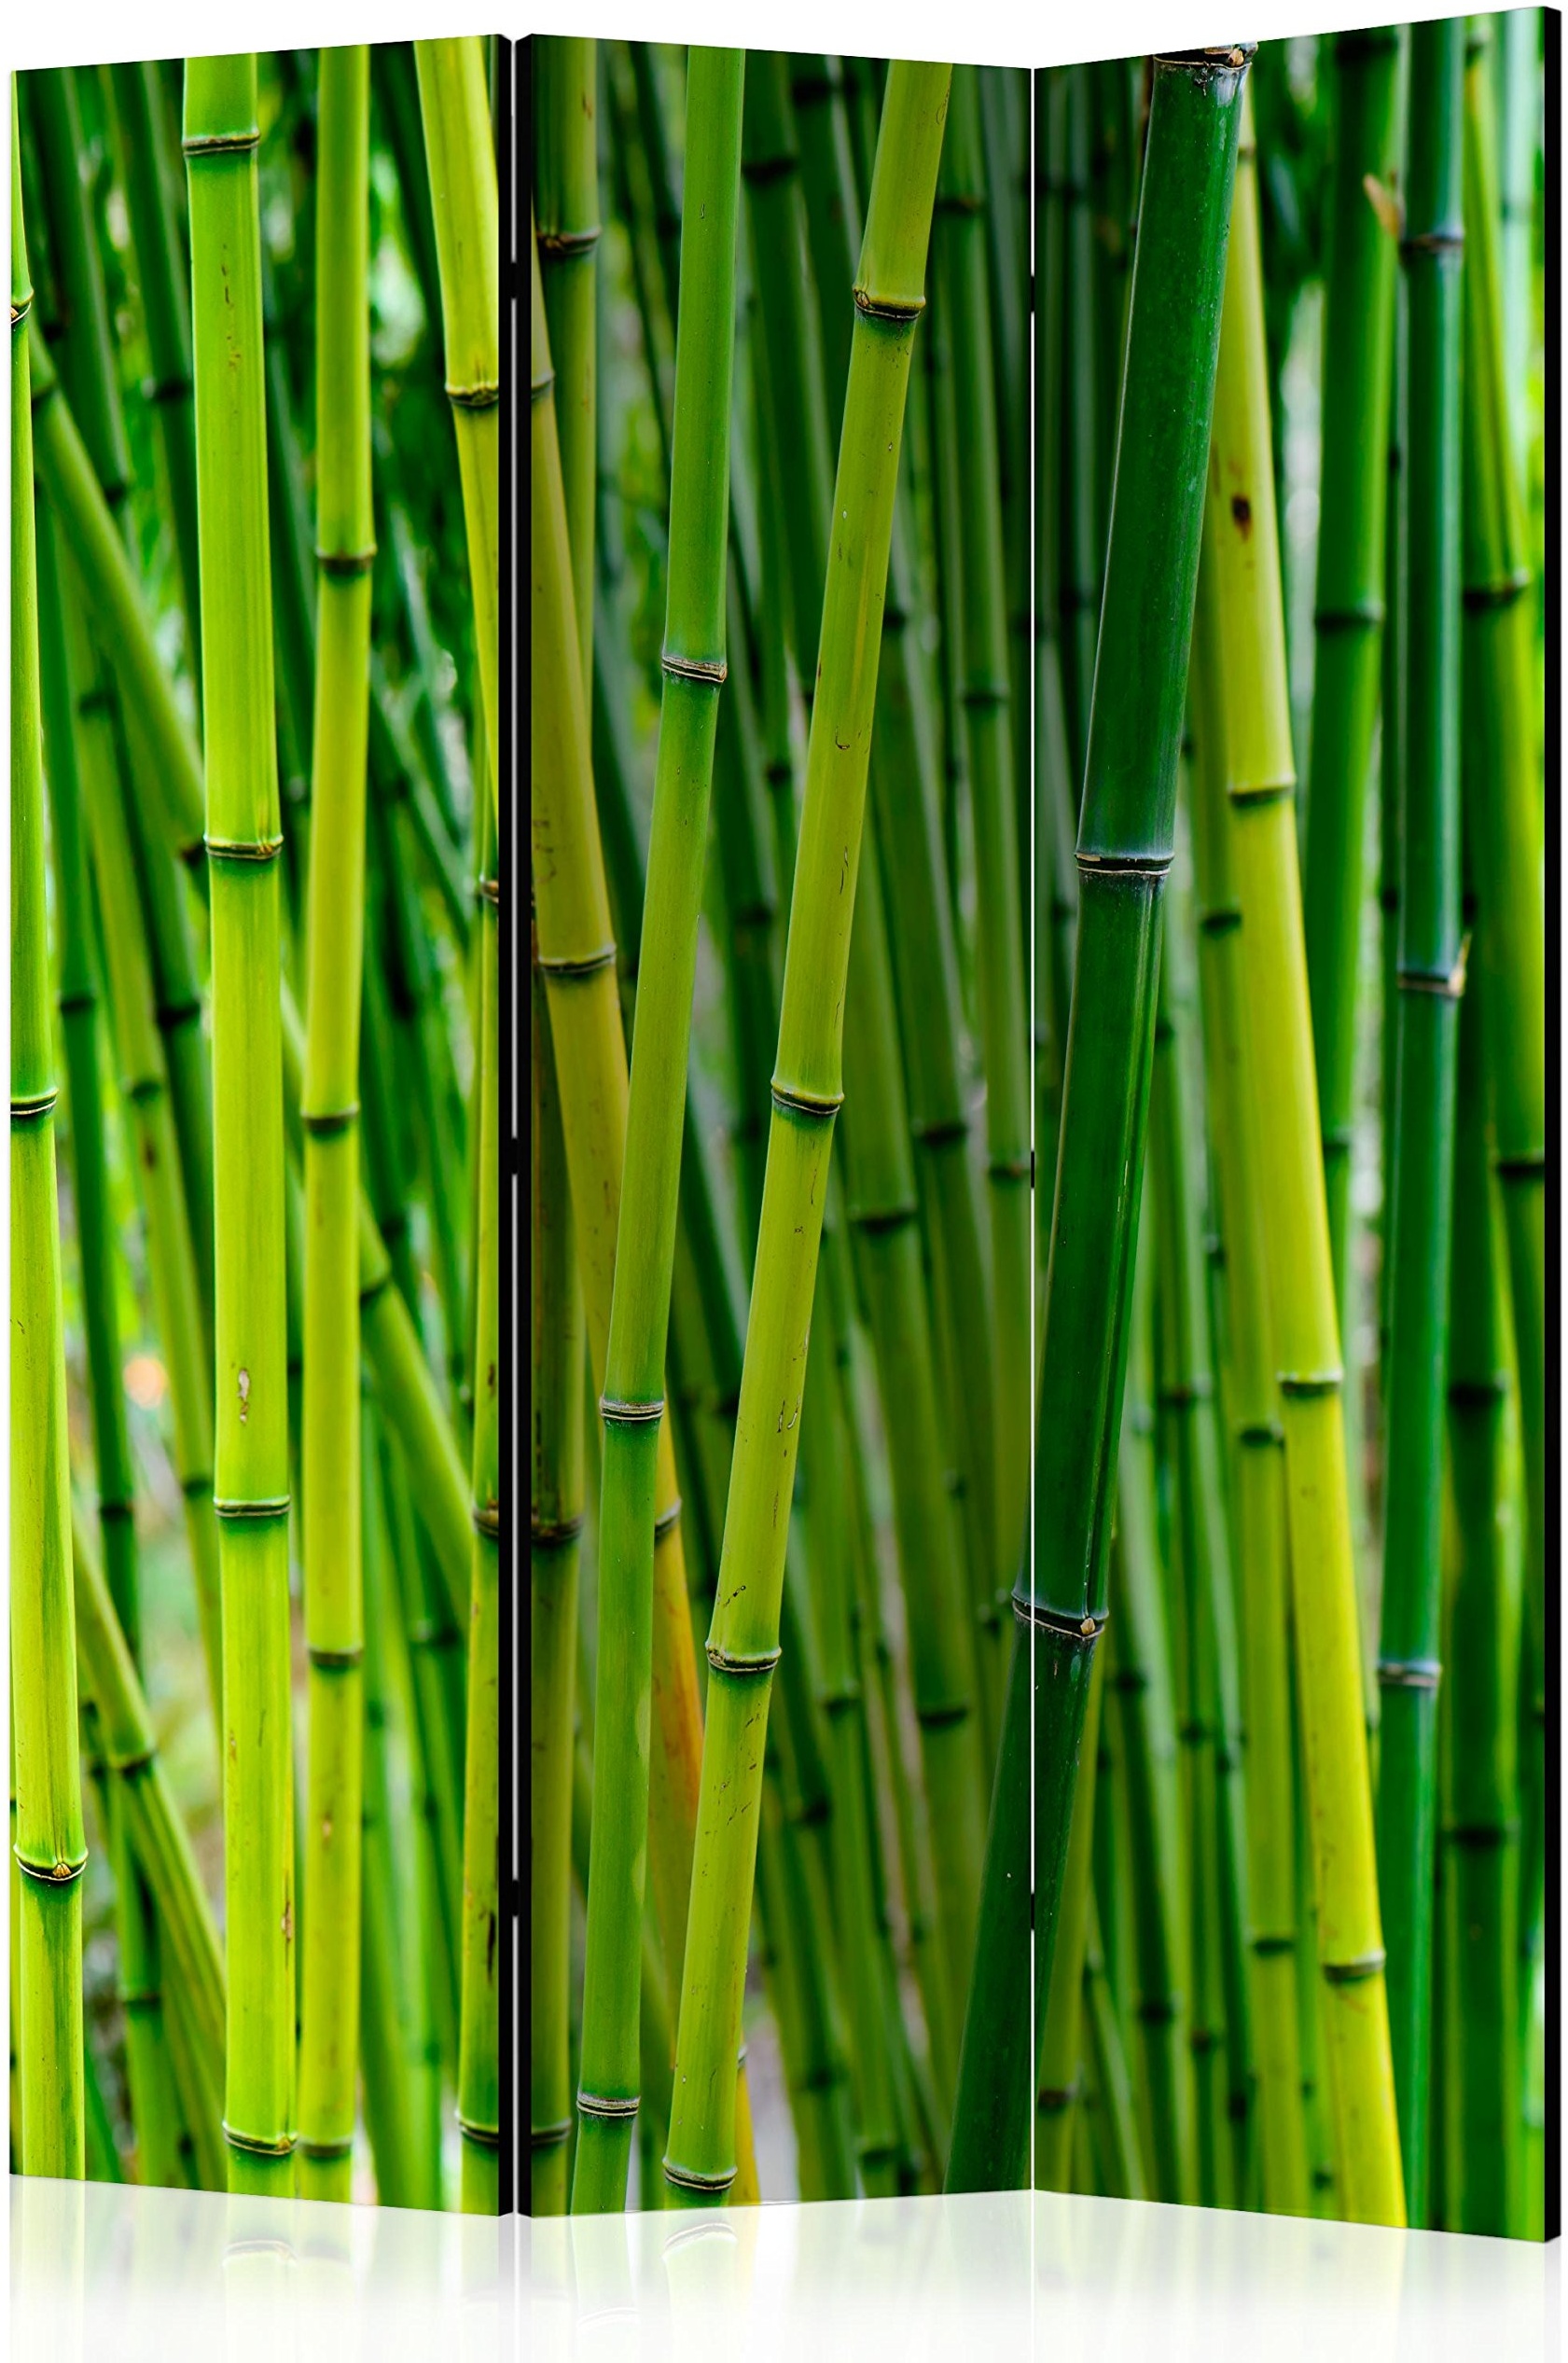 murando Raumteiler Spa Zen Bambus Natur Foto Paravent 135x172 cm beidseitig auf Vlies-Leinwand Bedruckt Trennwand Spanische Wand Sichtschutz Raumtrenner Home Office grün